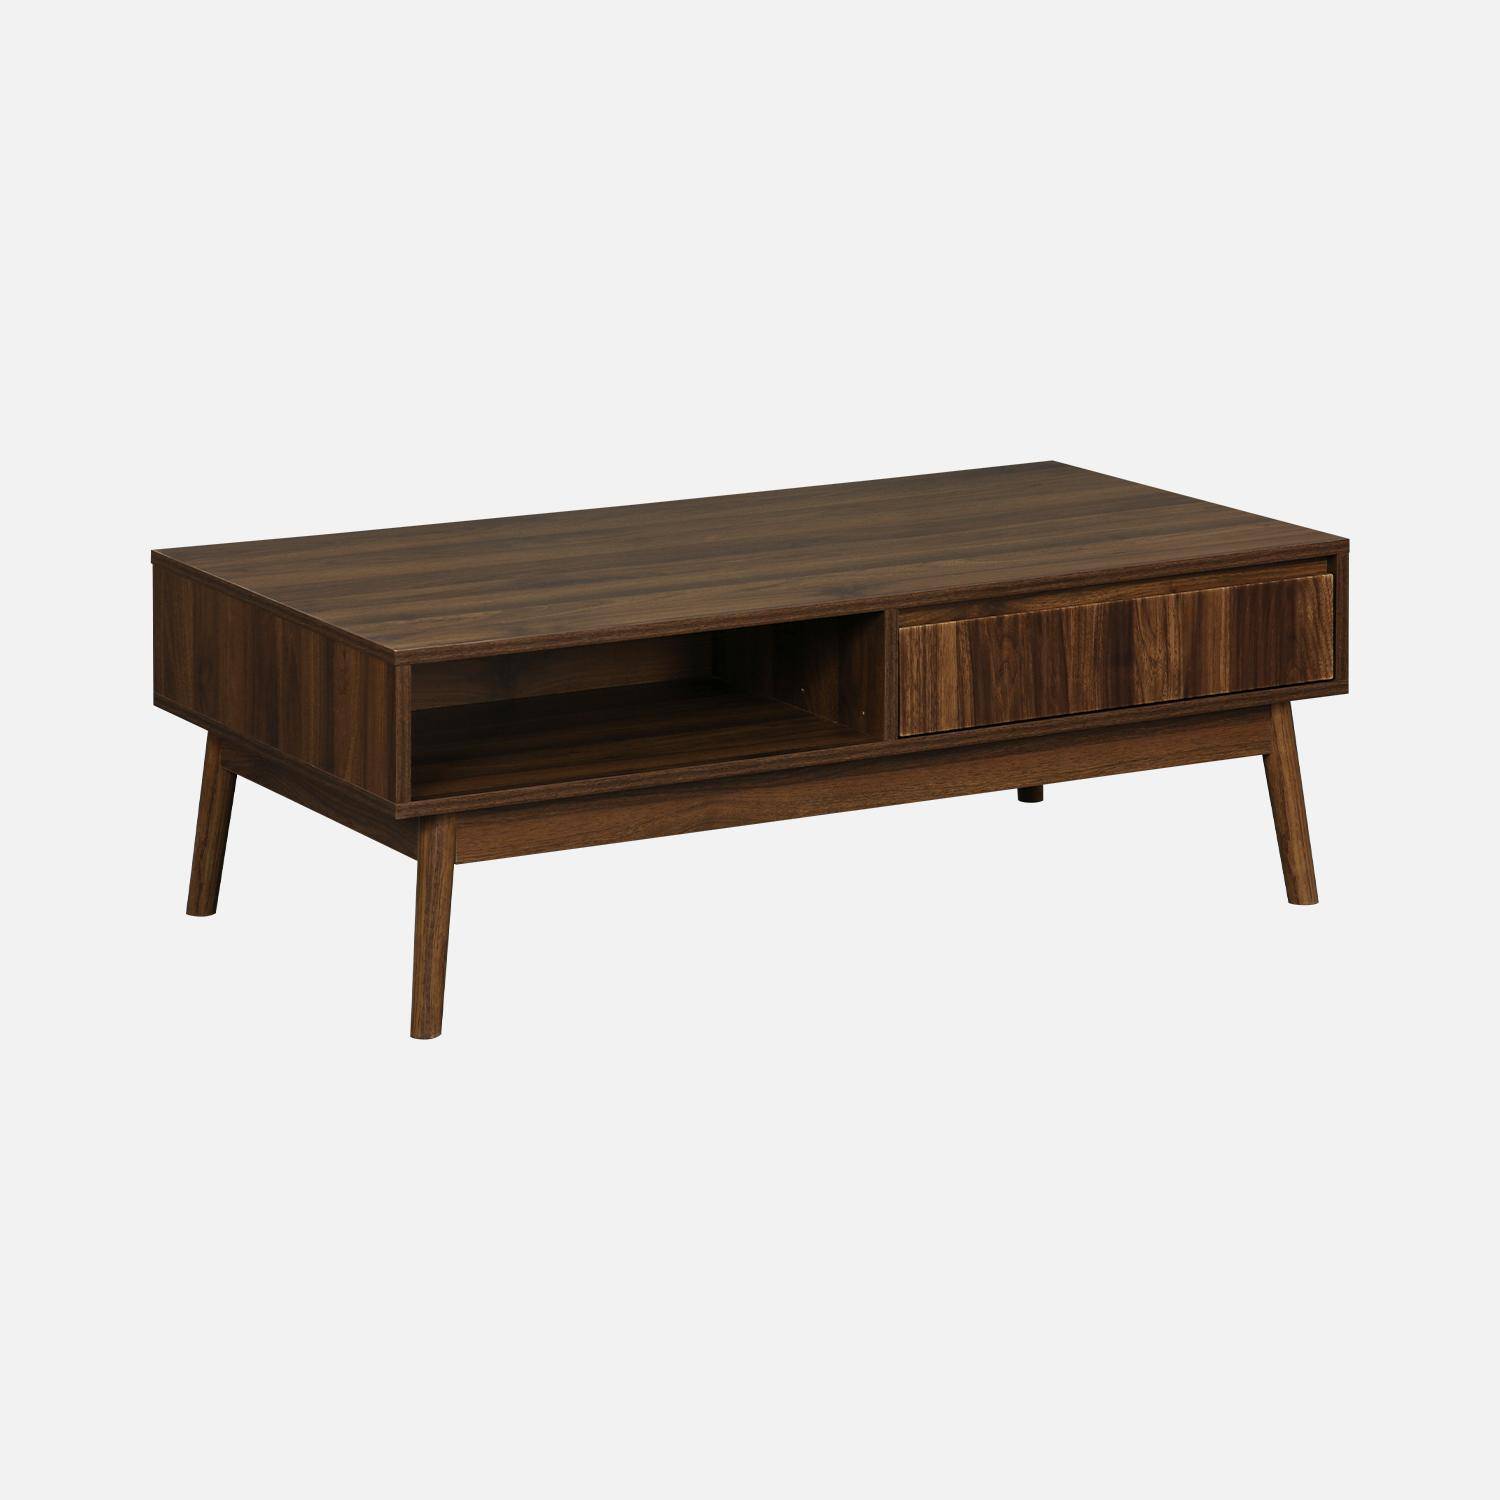 Wooden coffee table with one drawer storage, dark wood, L110xW59xH39cm Photo4